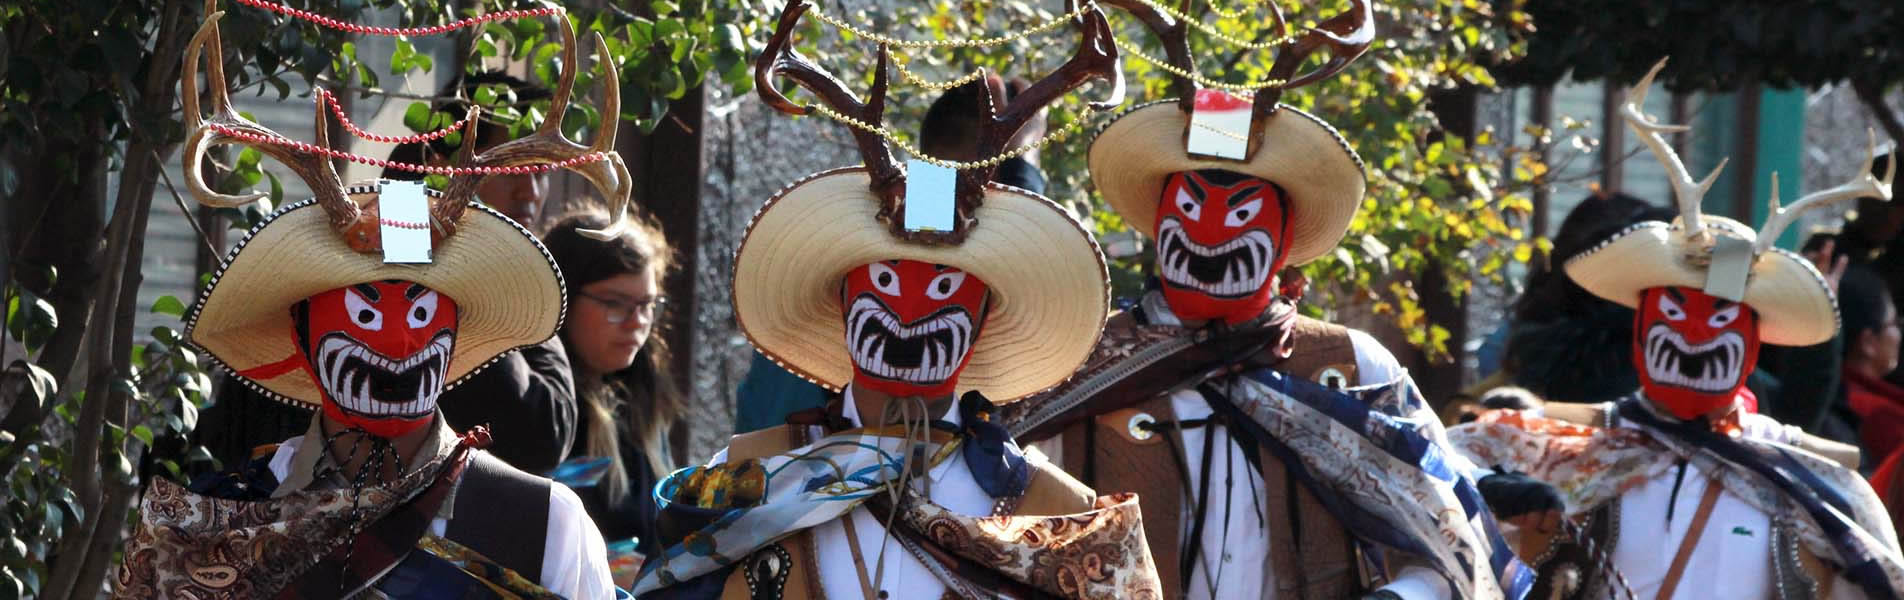 Gaceta ::Foto reportaje Carnavales de Hidalgo